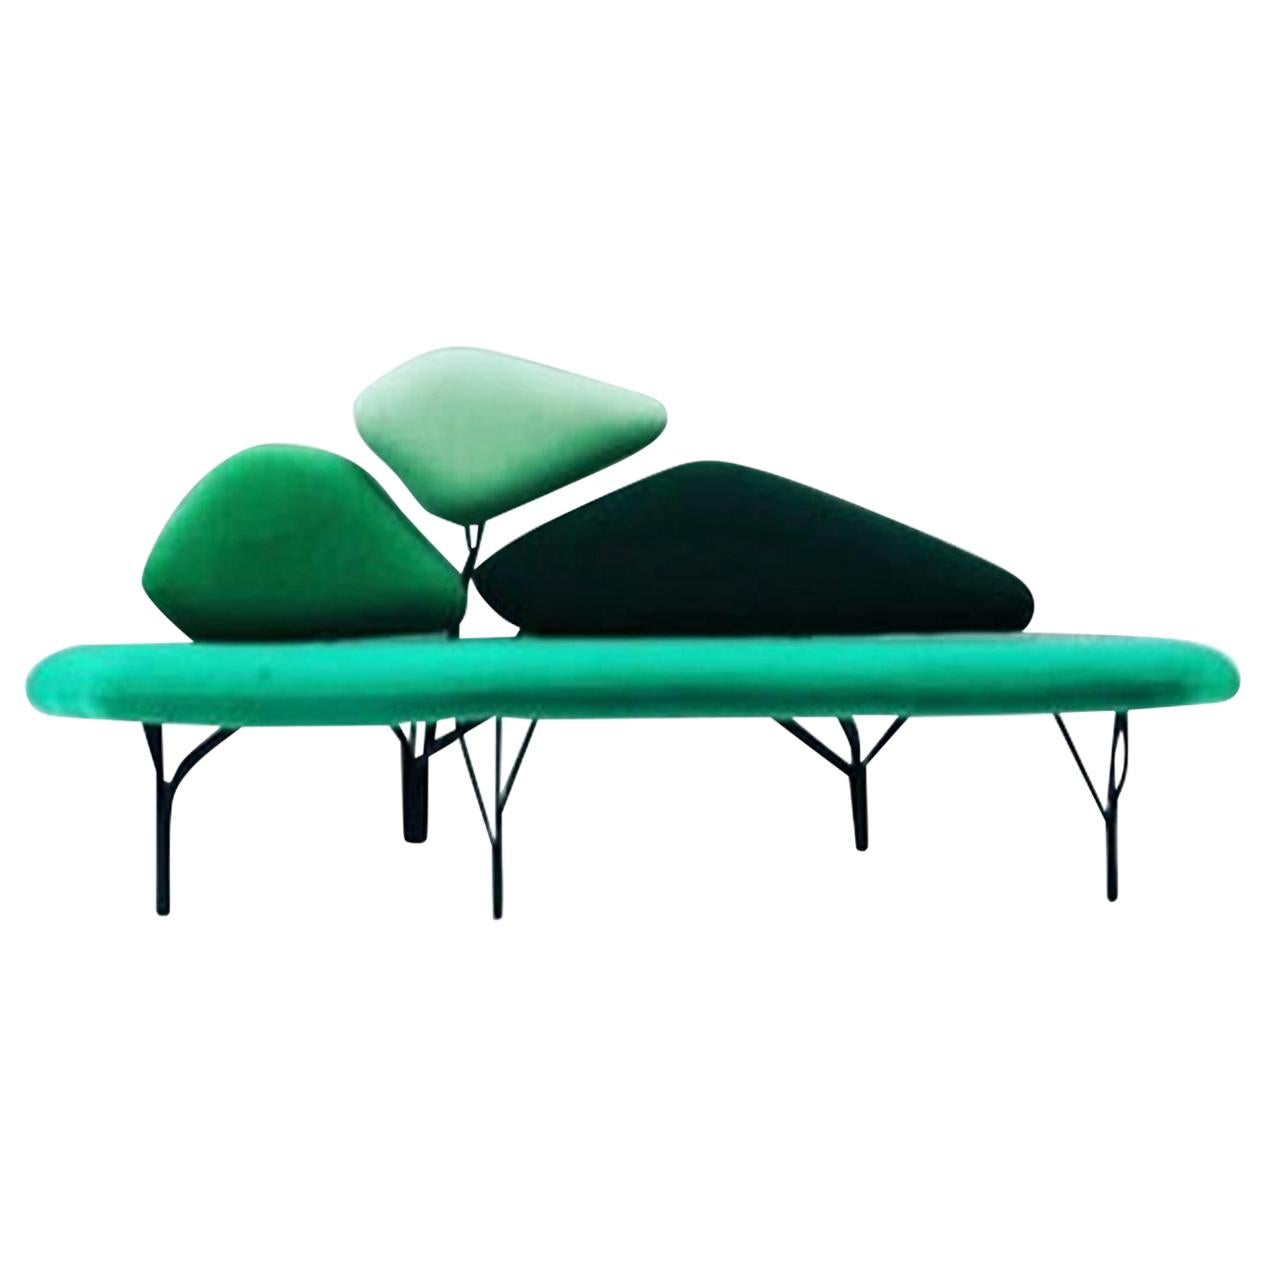 Green Borghese Sofa, Noé Duchaufour Lawrance